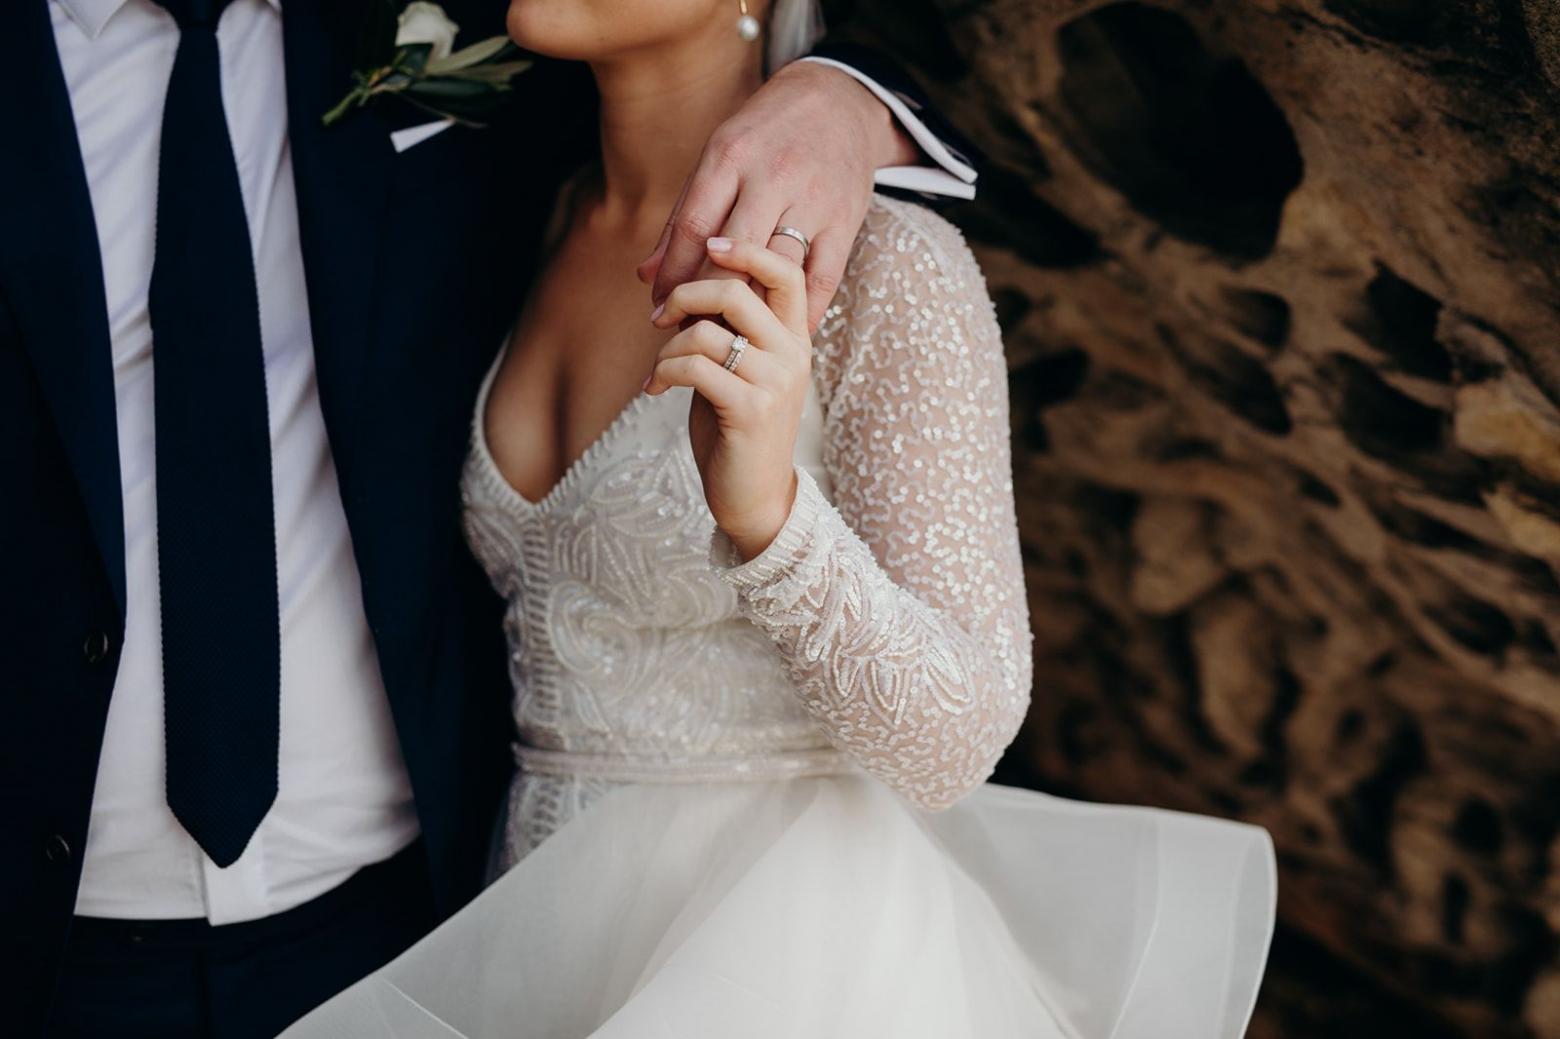 Real bride Cara wore the Luxe Celine wedding dress by Karen Willis Holmes.